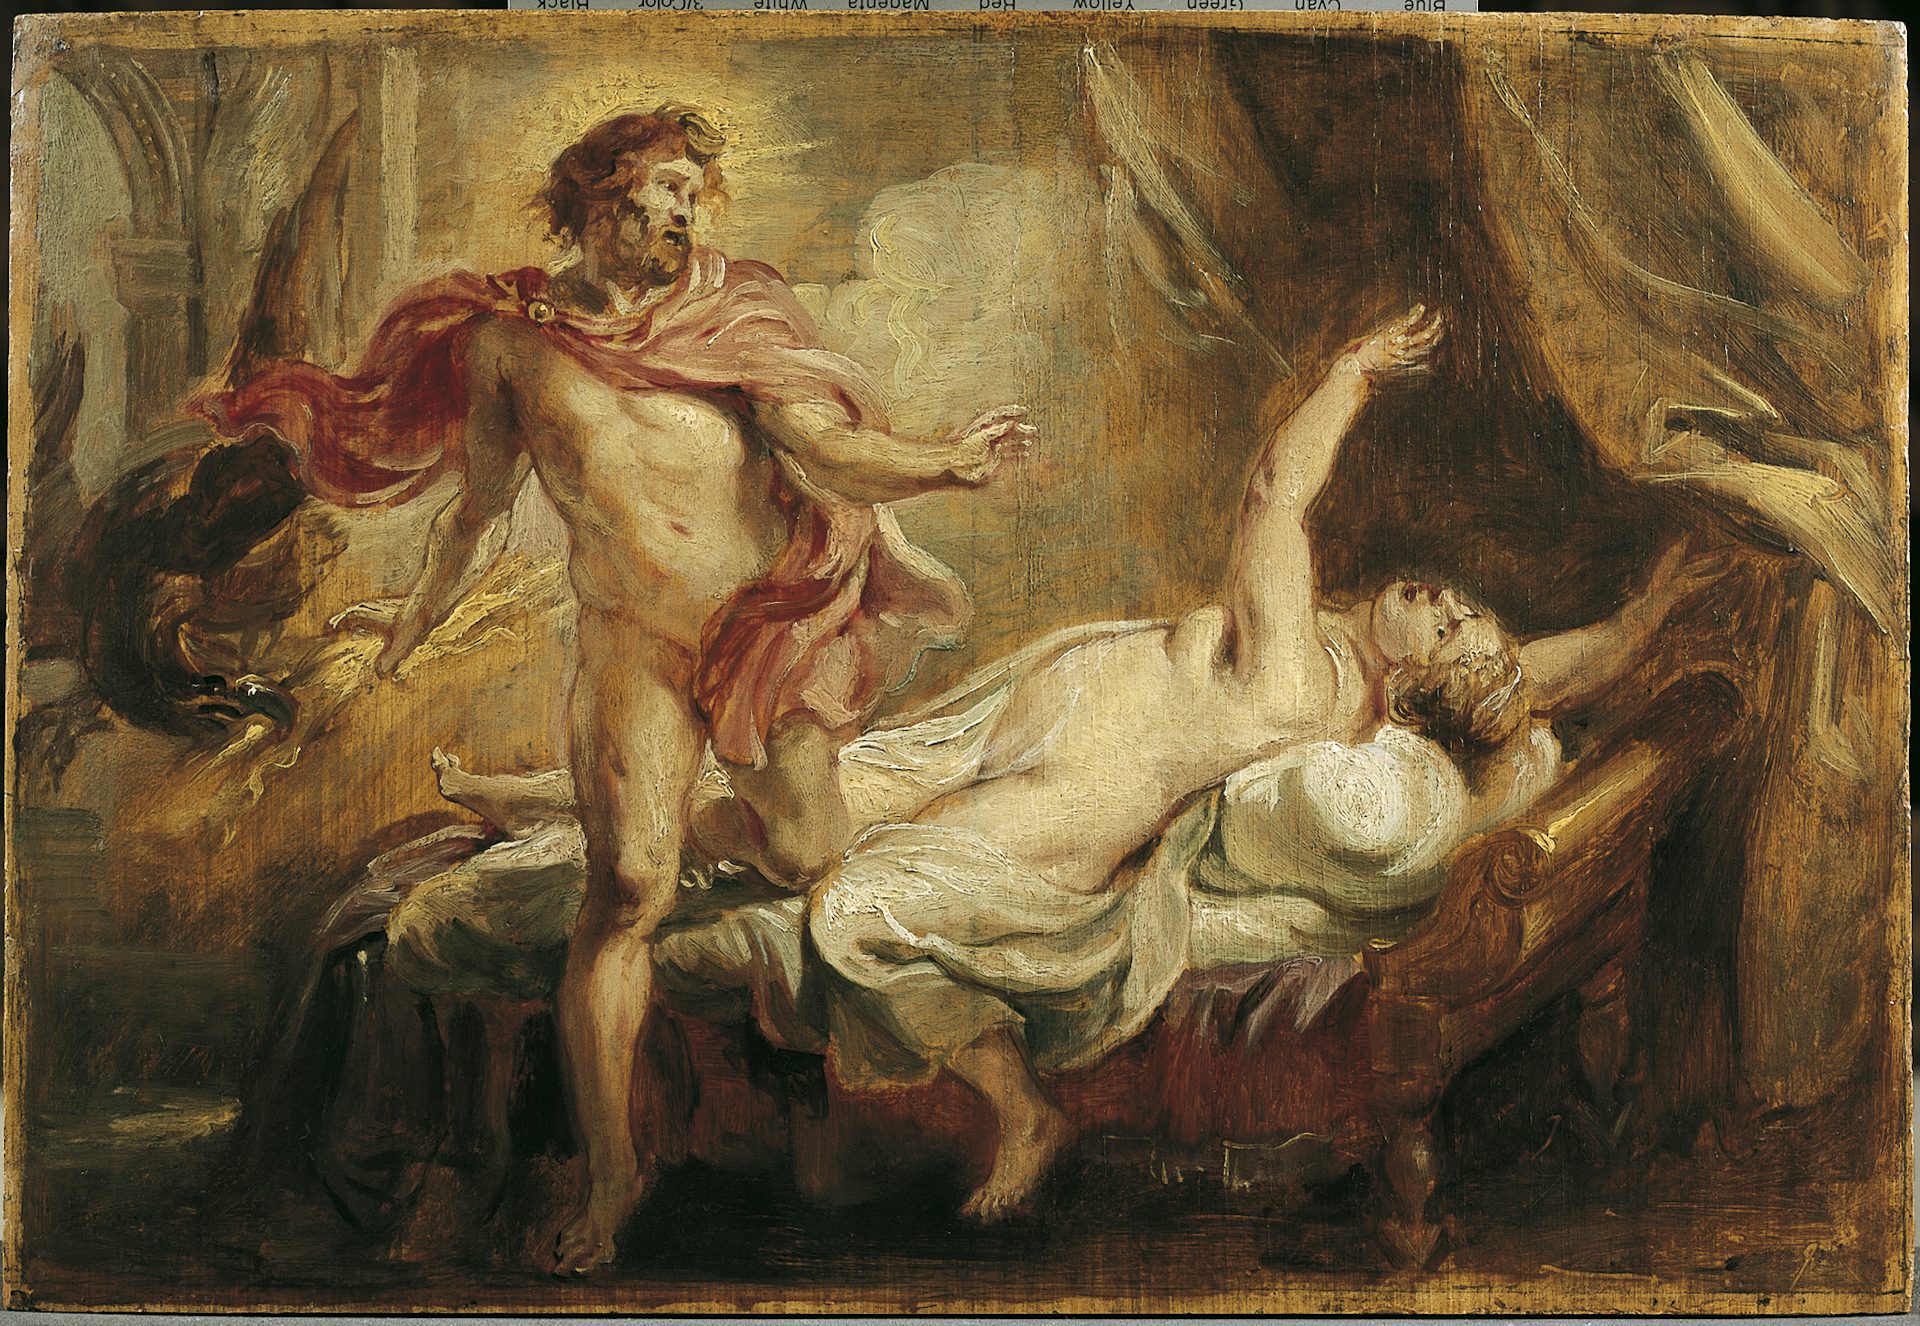 The Death of Semele by Peter Paul Rubens